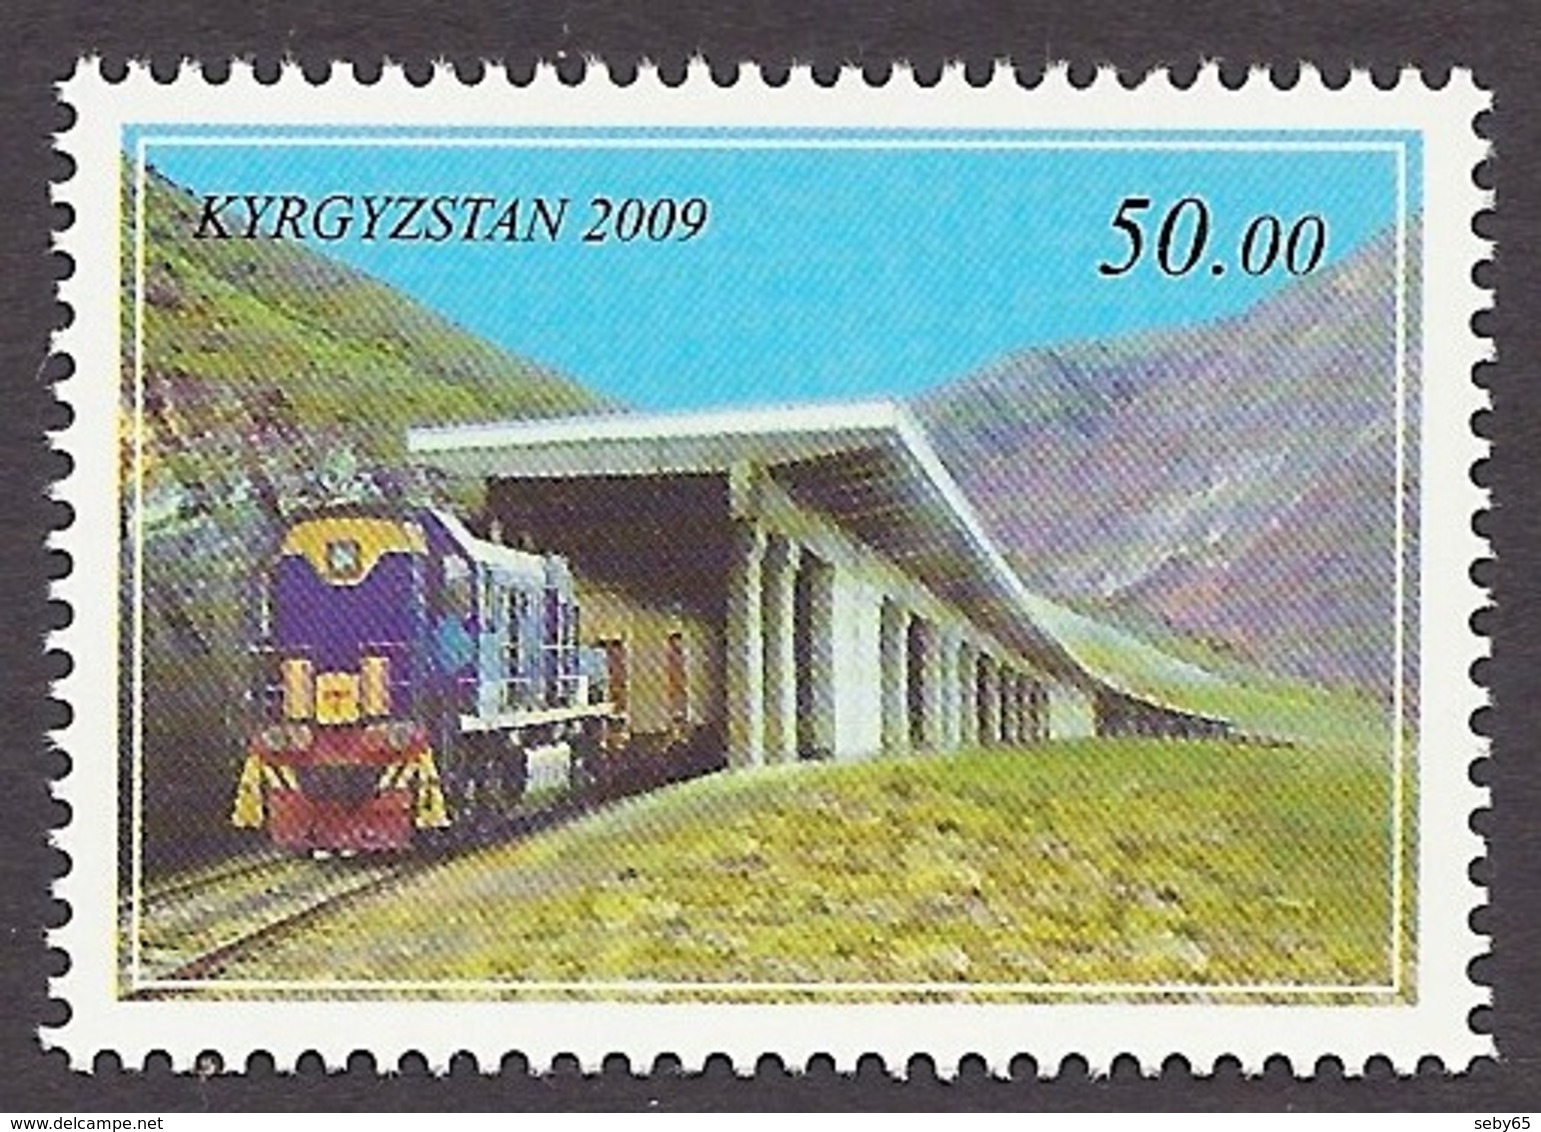 Kyrgyzstan 2009 - Transport, Railways, Train, Trains, Locomotive, Architecture, MNH - Kyrgyzstan